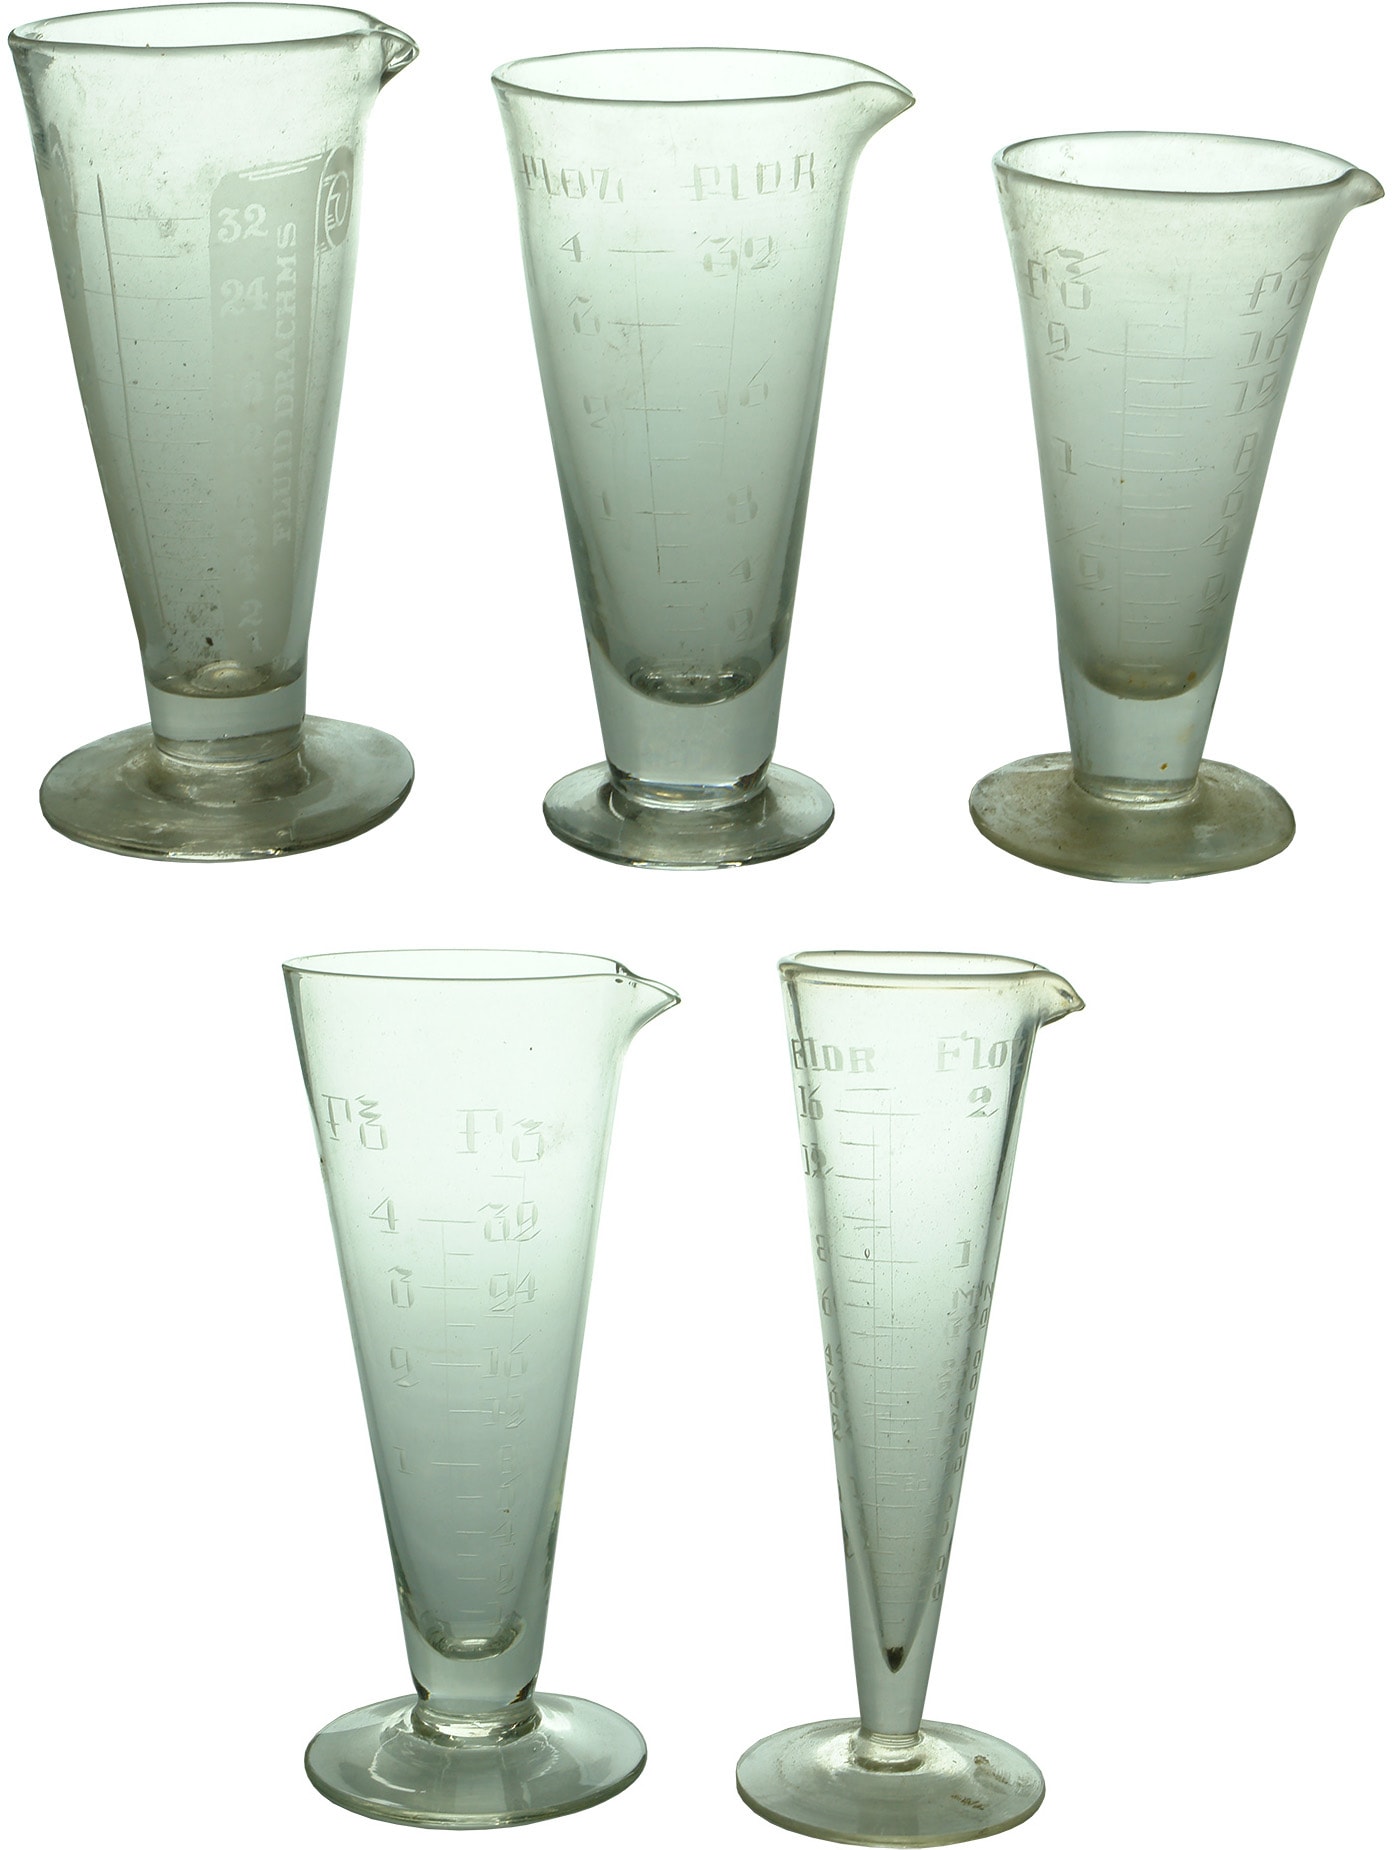 Early Pharmacy Measuring Glass Beakers